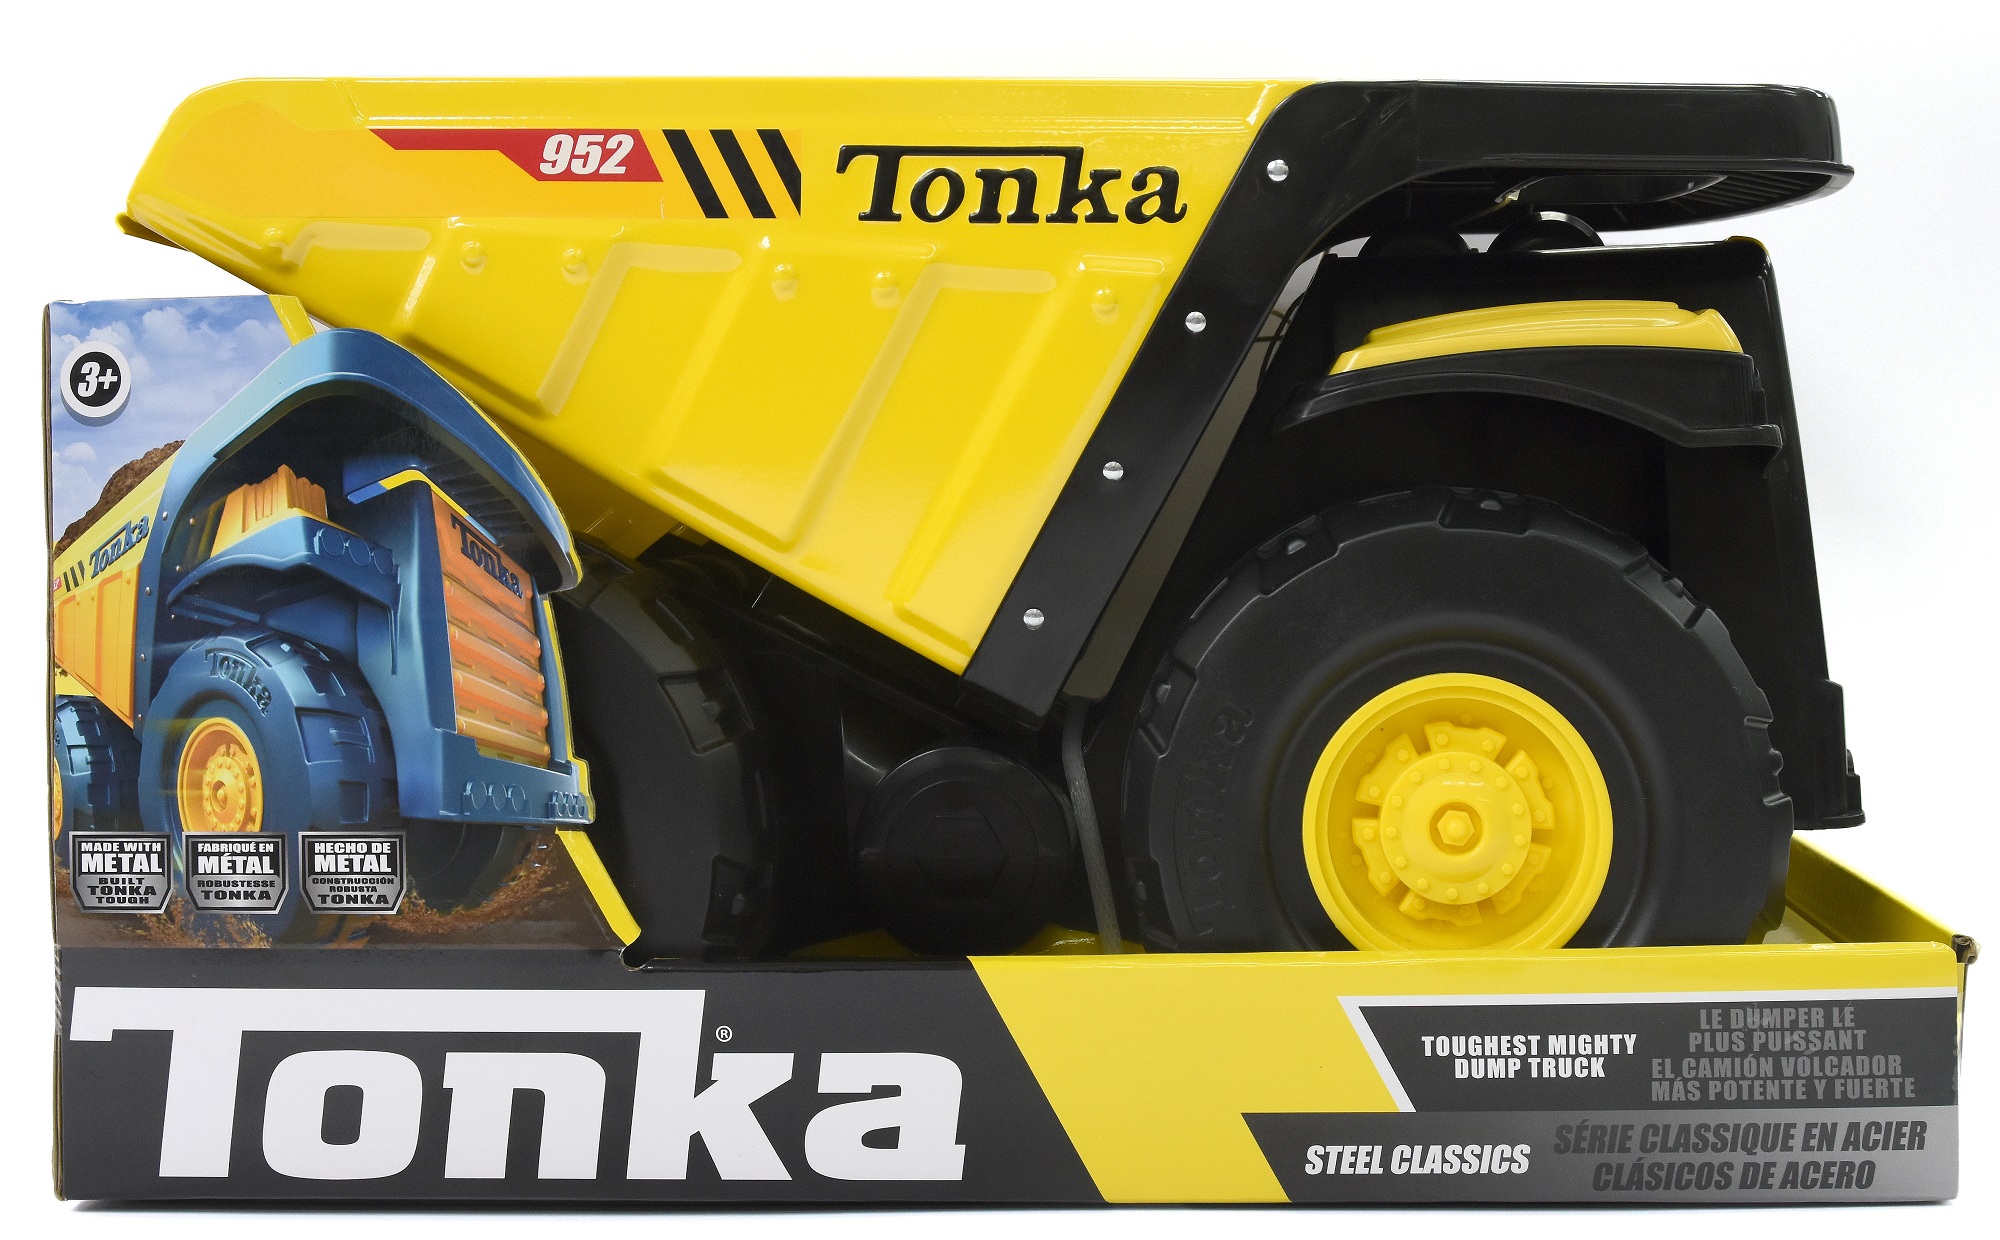 Tonka - Steel Classics Toughest Mighty Dump Truck รถเหล็ก ก่อสร้าง ทองก้า - คลาสสิค เตอเอส์ท ไมตี้ ดรัมป์ ทรัค - รถบรรทุก รถของเล่น รถเด็กเล่น